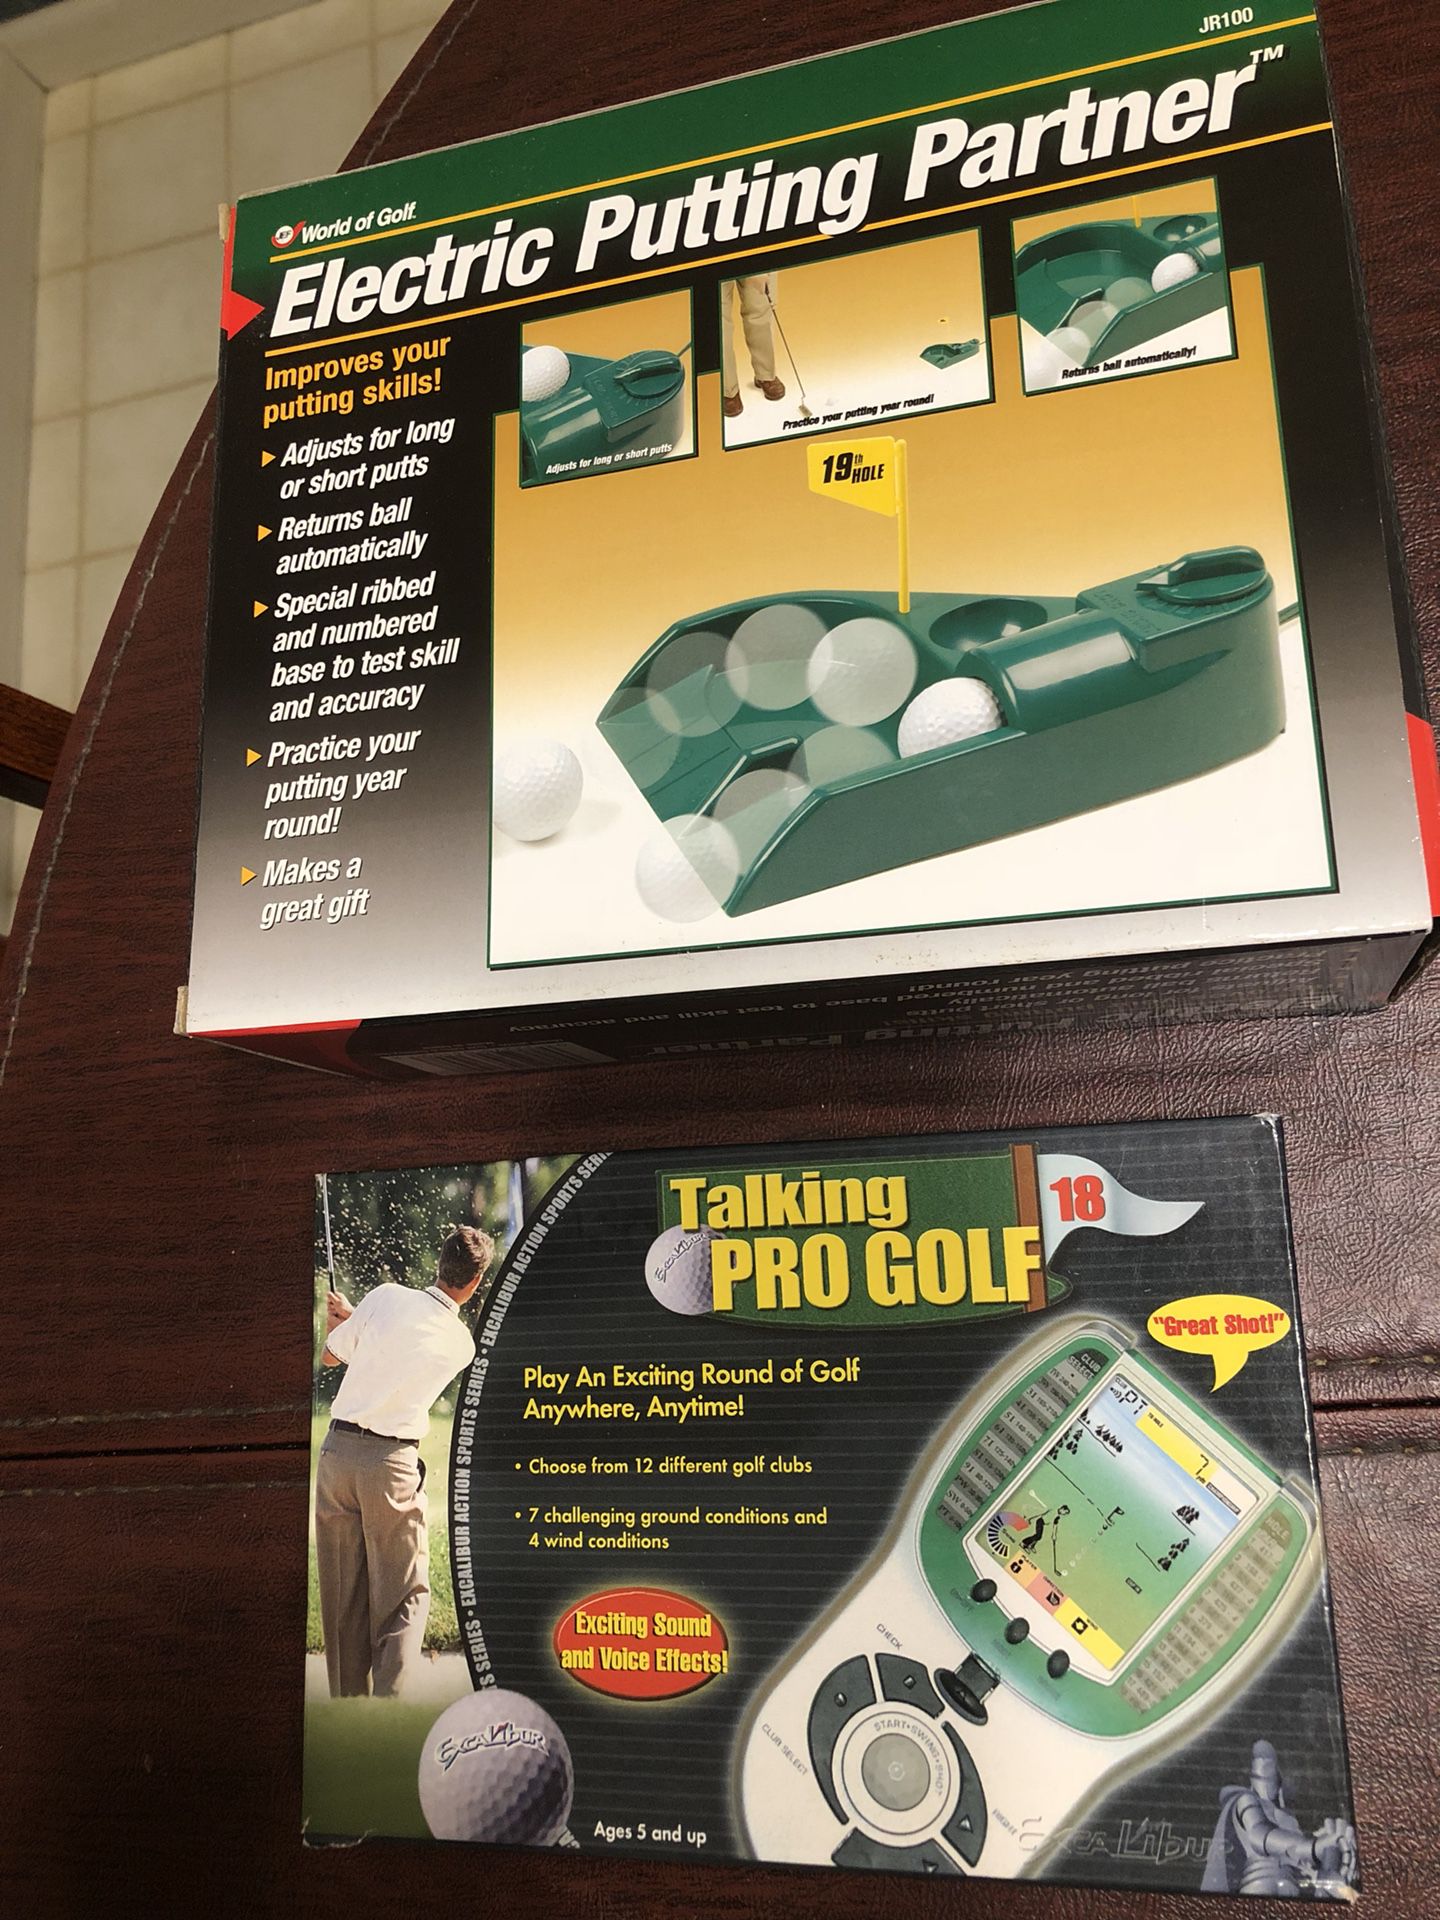 New! Talking Pro Golf & Electric Putting Partner